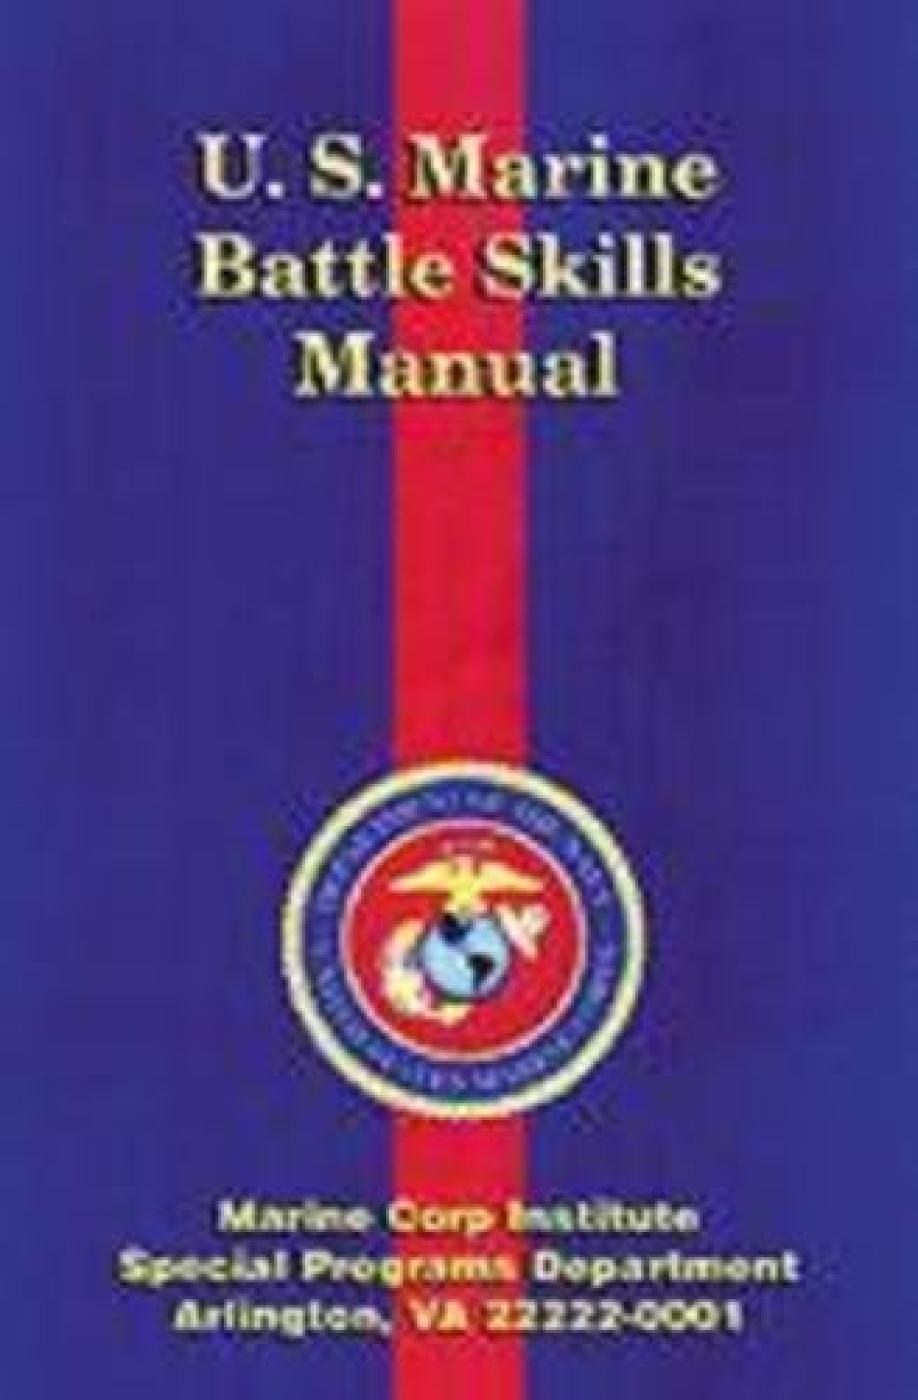 U.S. Marine Battle Skills Manual